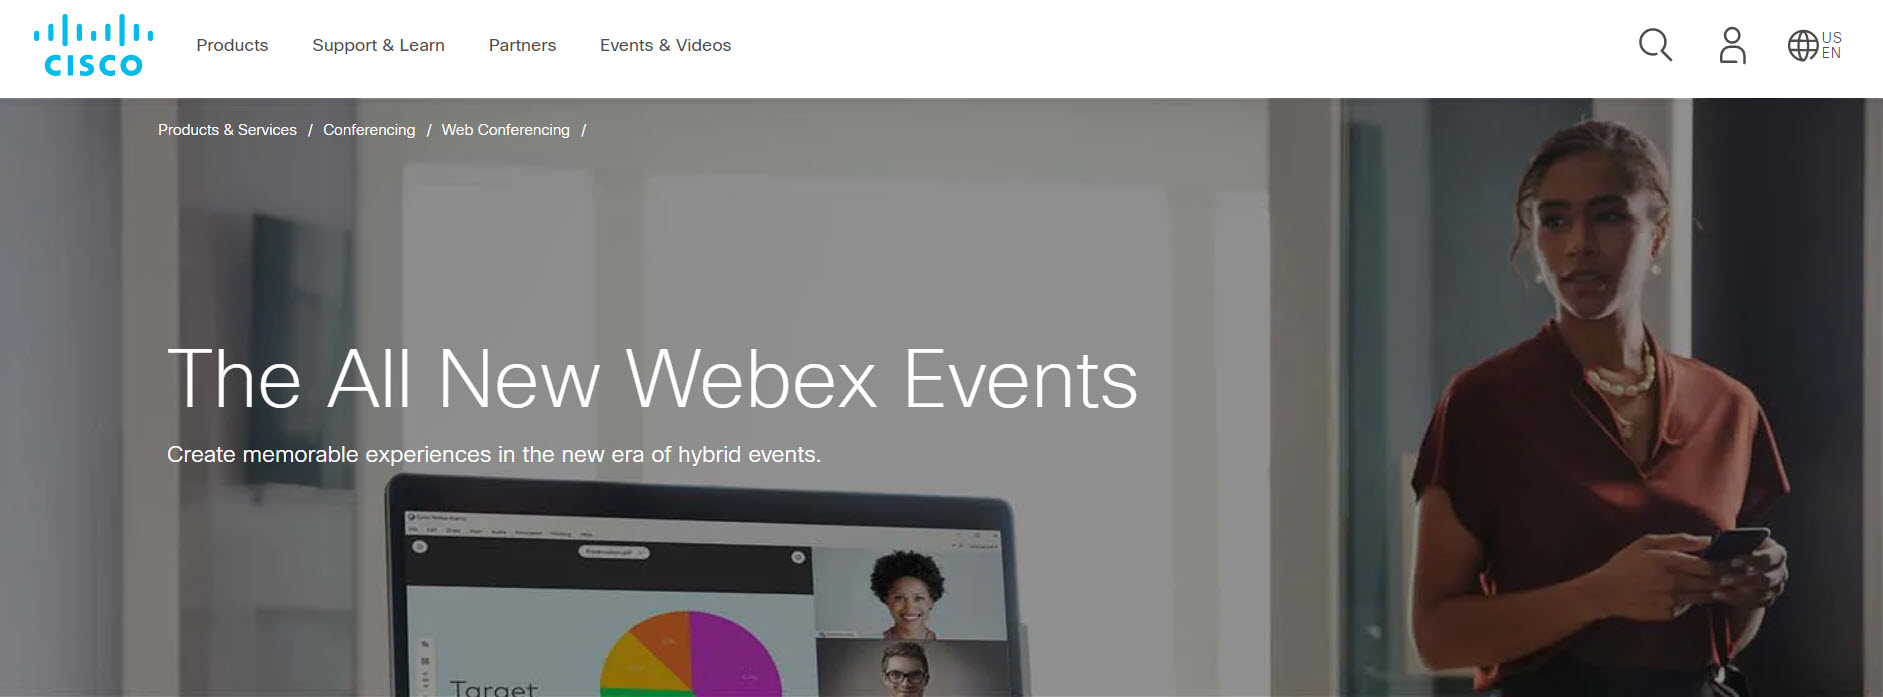 cisco web events